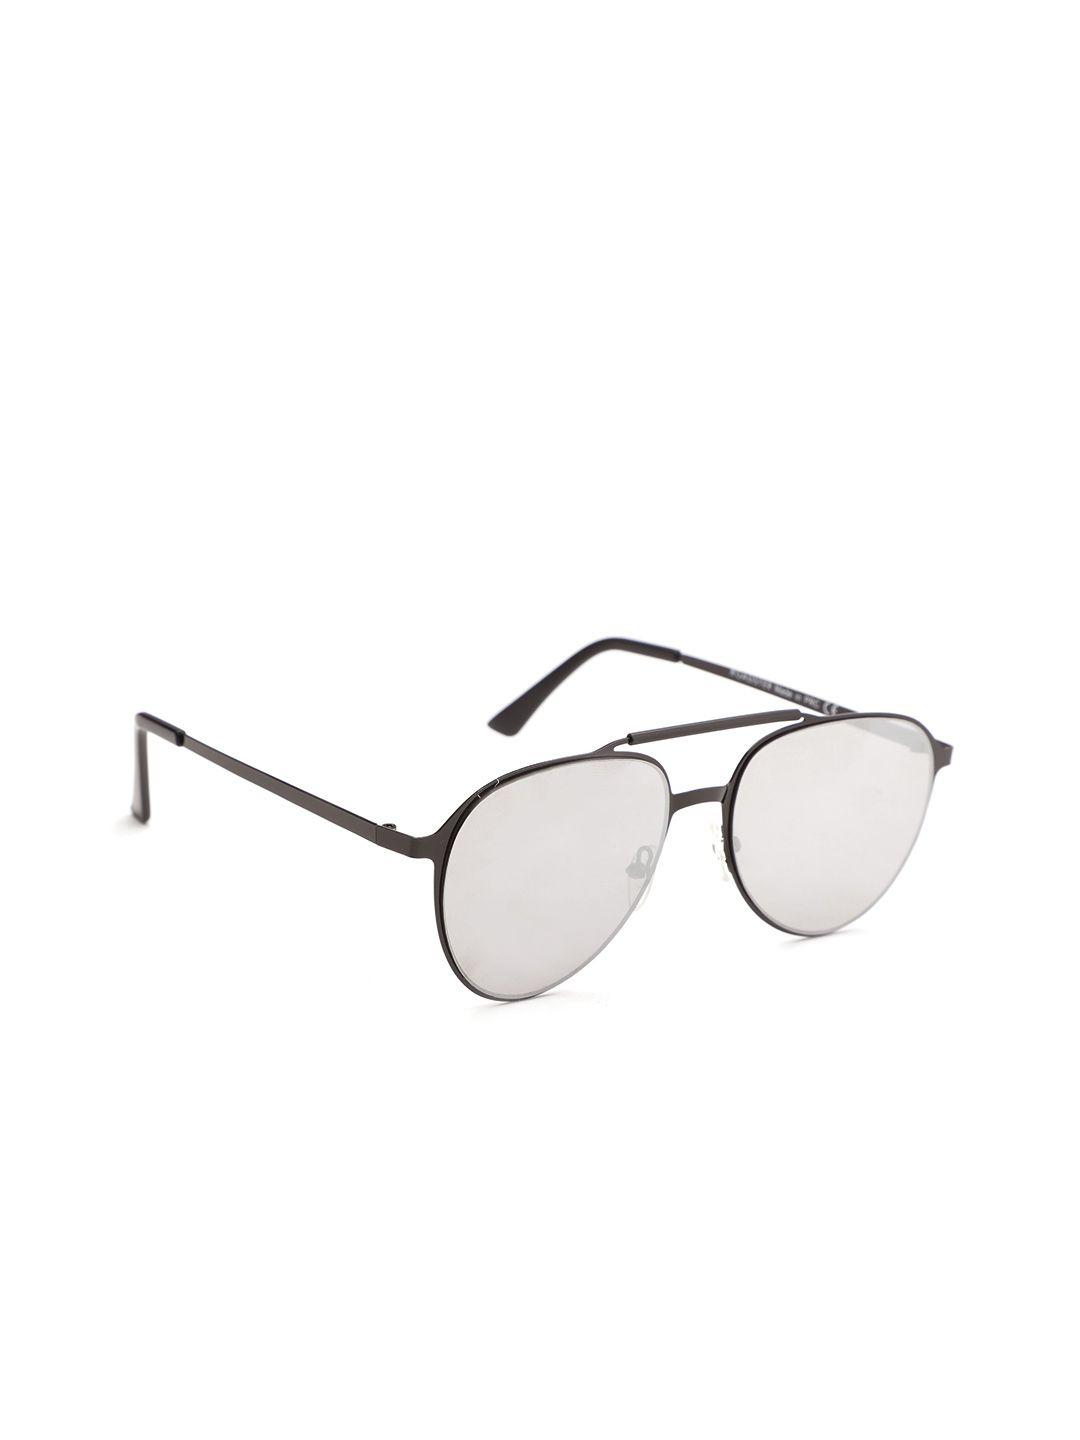 roadster unisex mirrored lens & black aviator sunglasses with uv protected lens